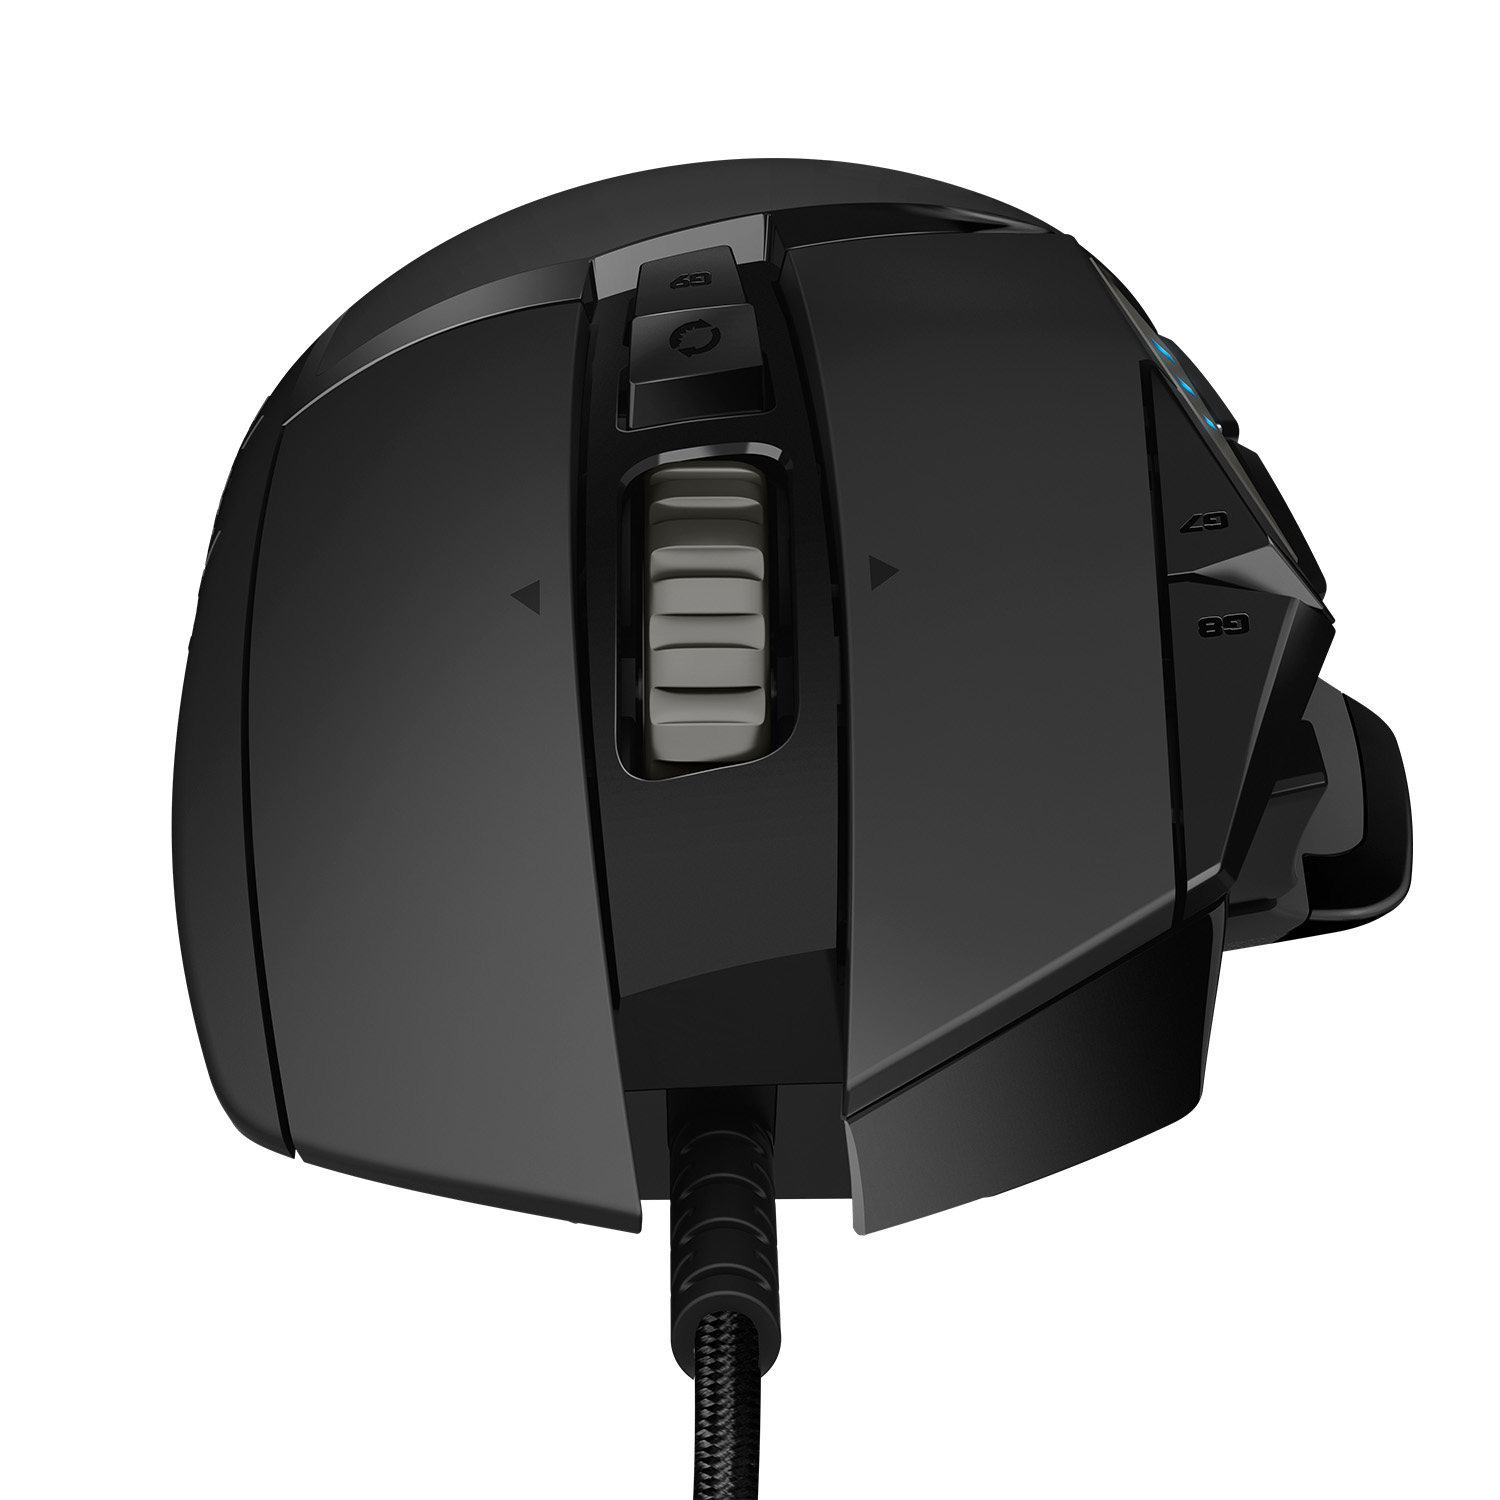 LOGITECH G502 HERO High Performance Gaming Mouse EWR2